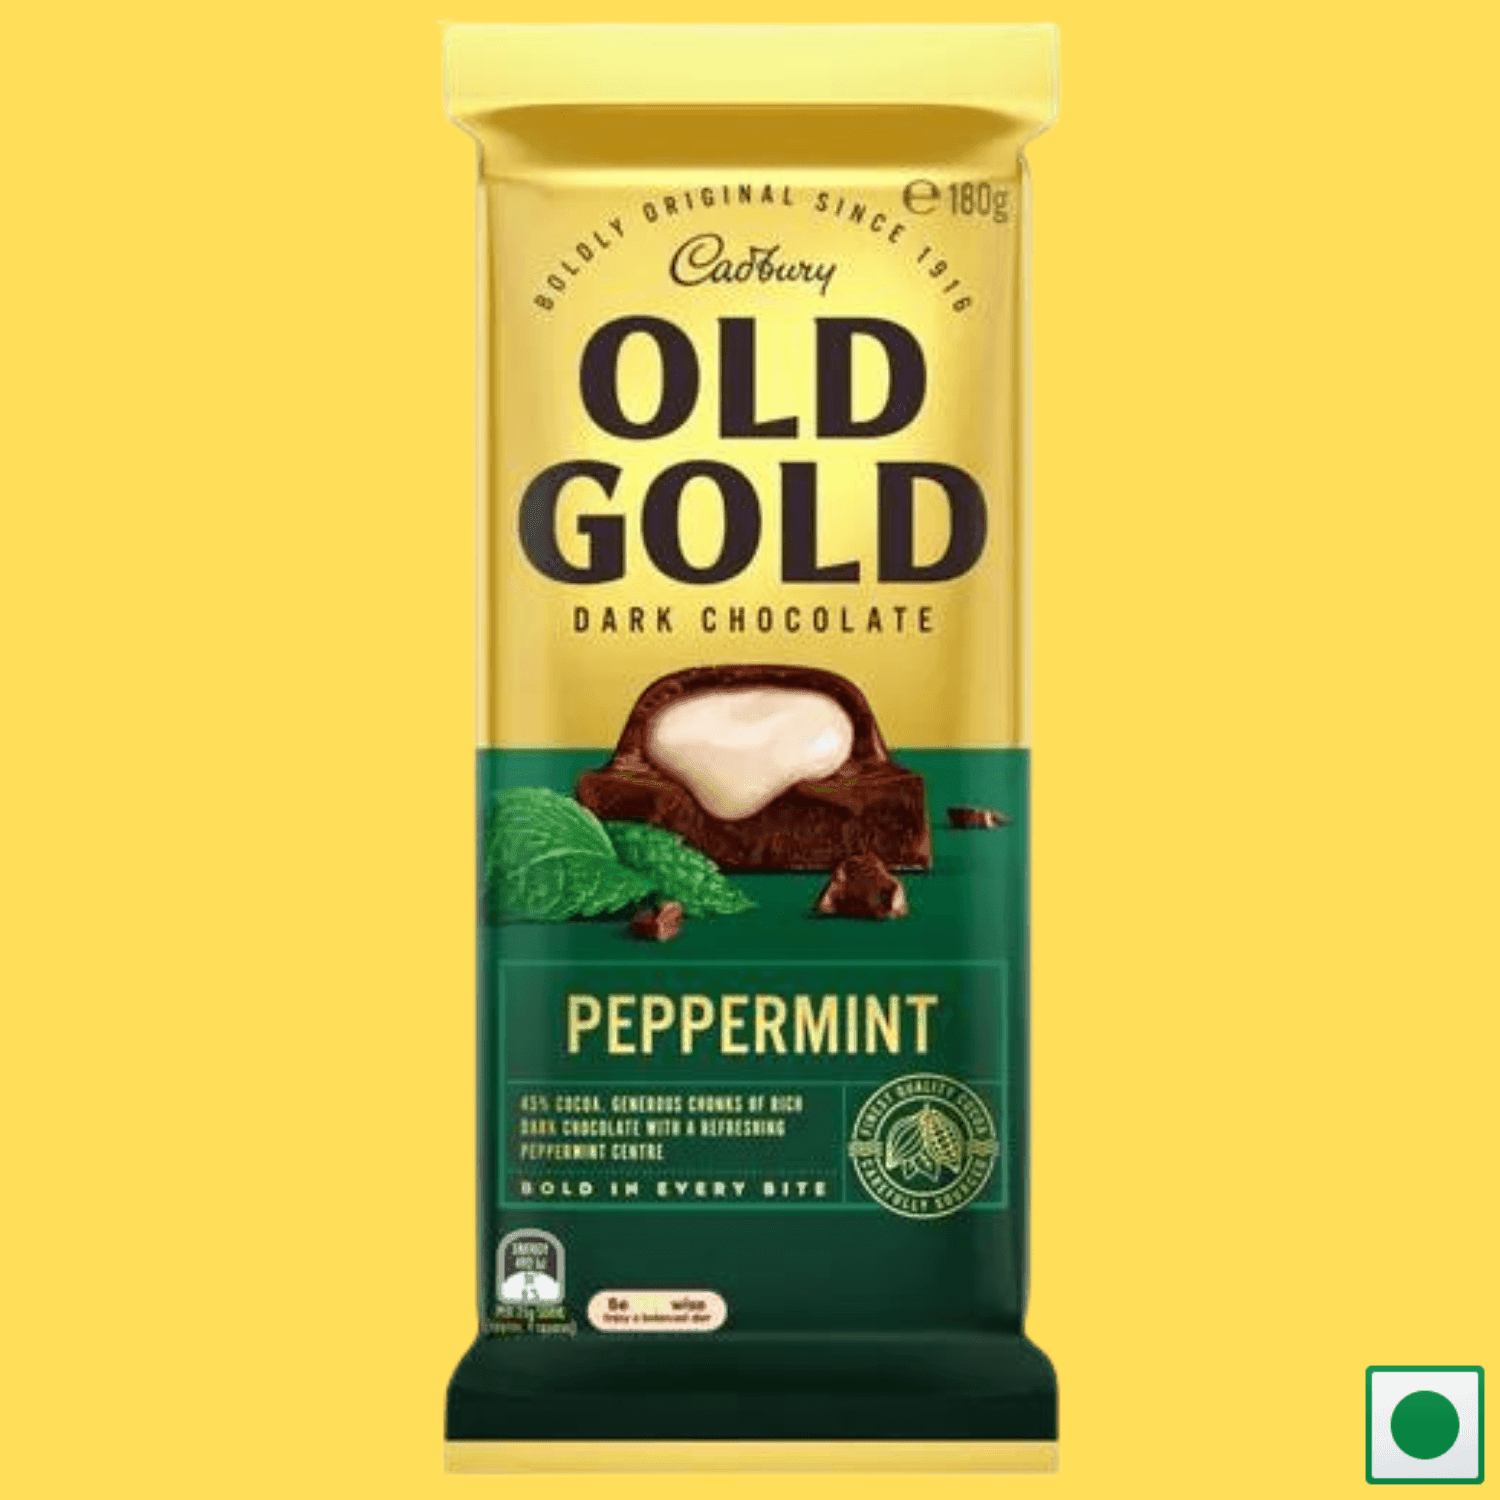 Cadbury Old Gold Dark Chocolate Peppermint, 180g (Australian Imported) - Super 7 Mart